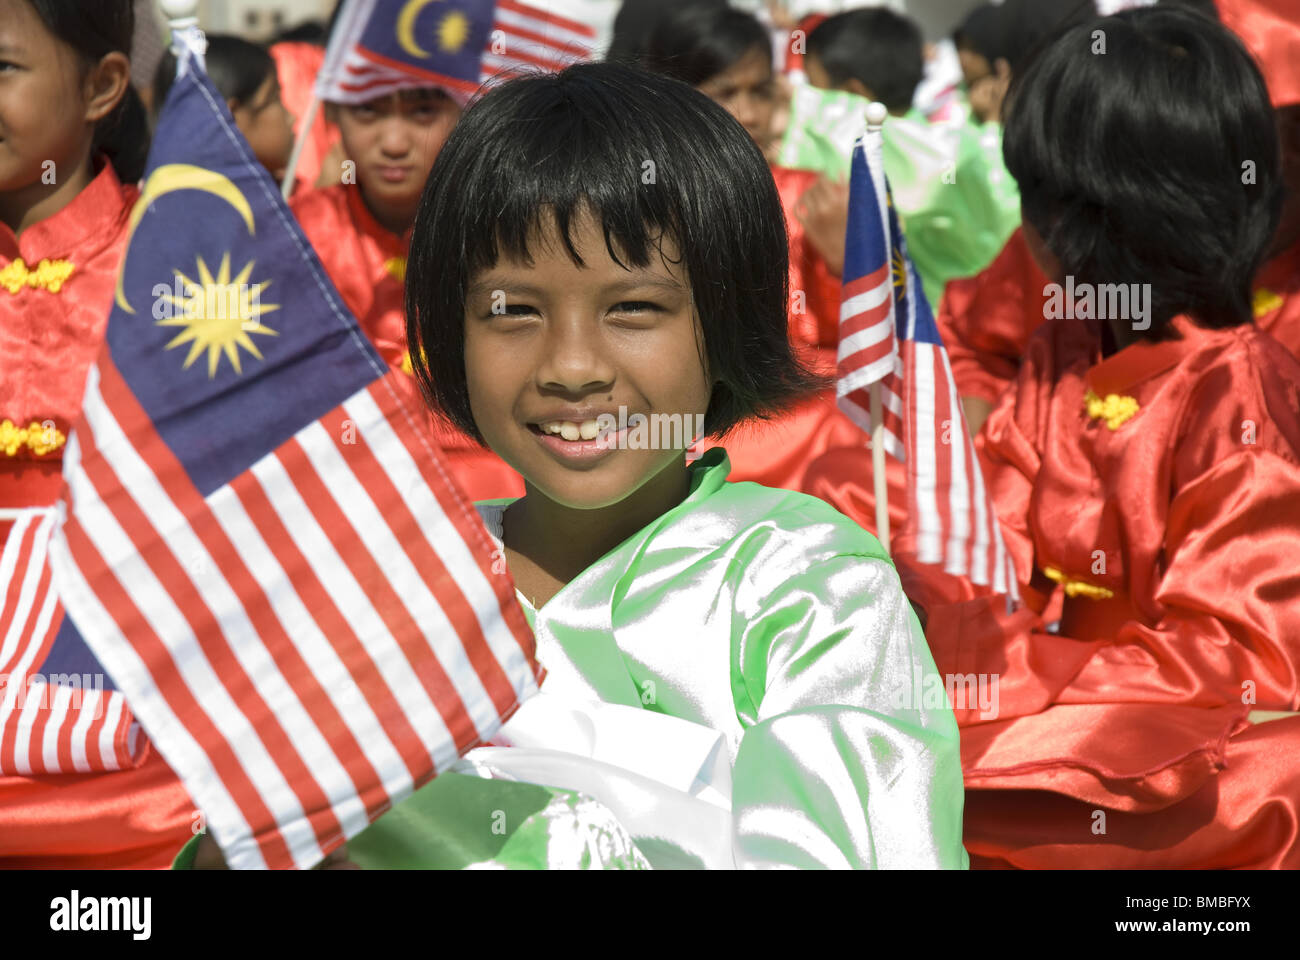 A smiling young performer carrying the Malaysian flag, Merdeka Square, Kuala Lumpur, Malaysia Stock Photo